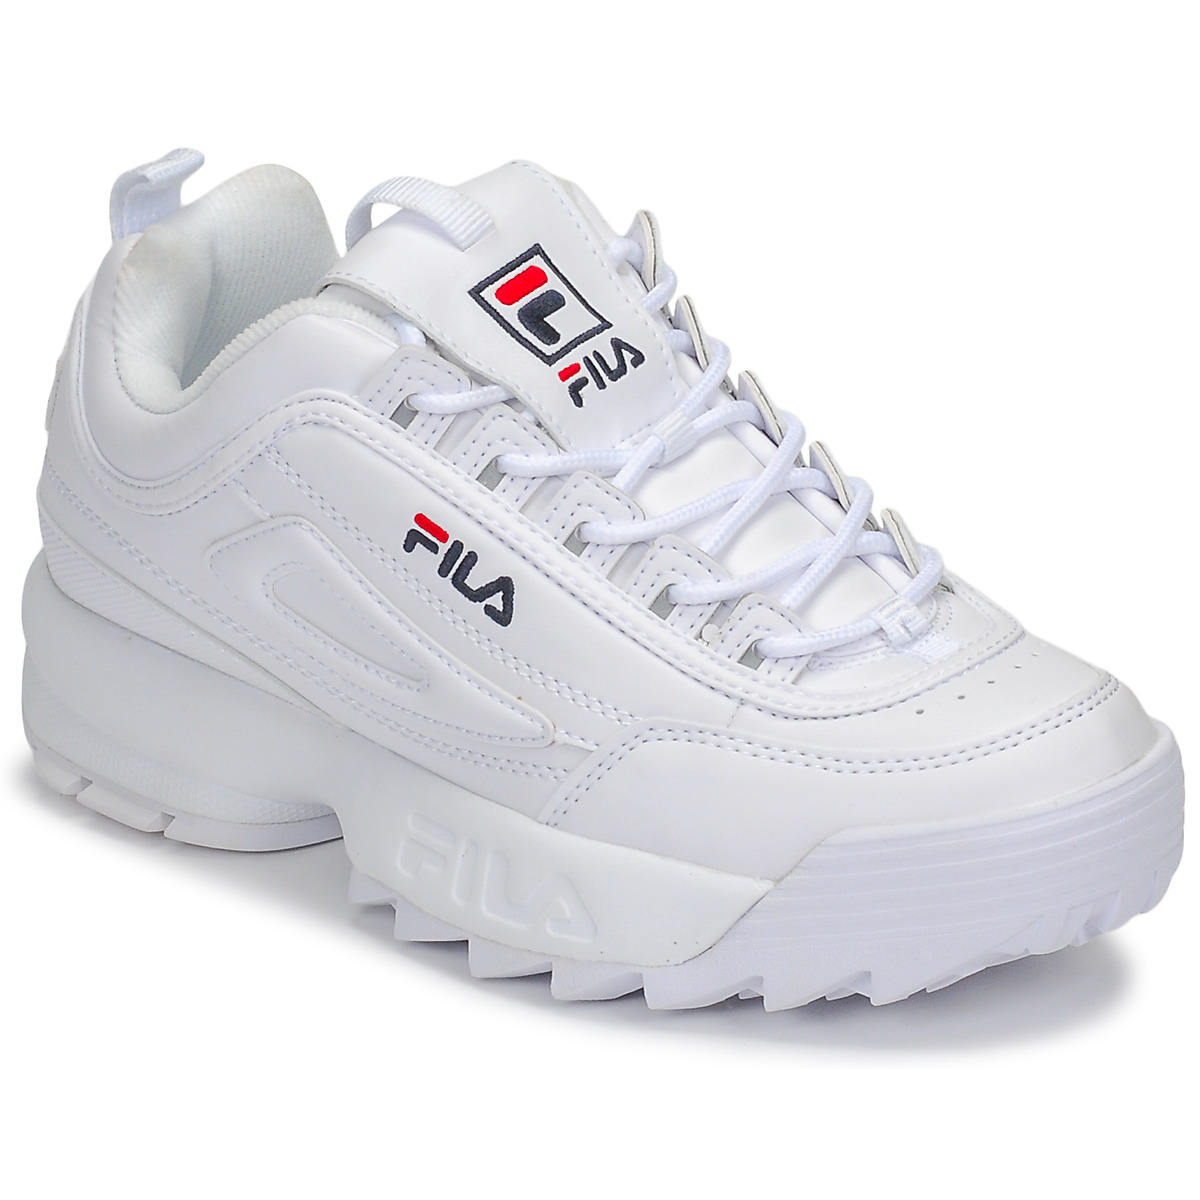 Fila DISRUPTOR LOW WMN Bianco - Consegna gratuita | Spartoo.it ! - Scarpe  Sneakers basse Donna 70,50 €